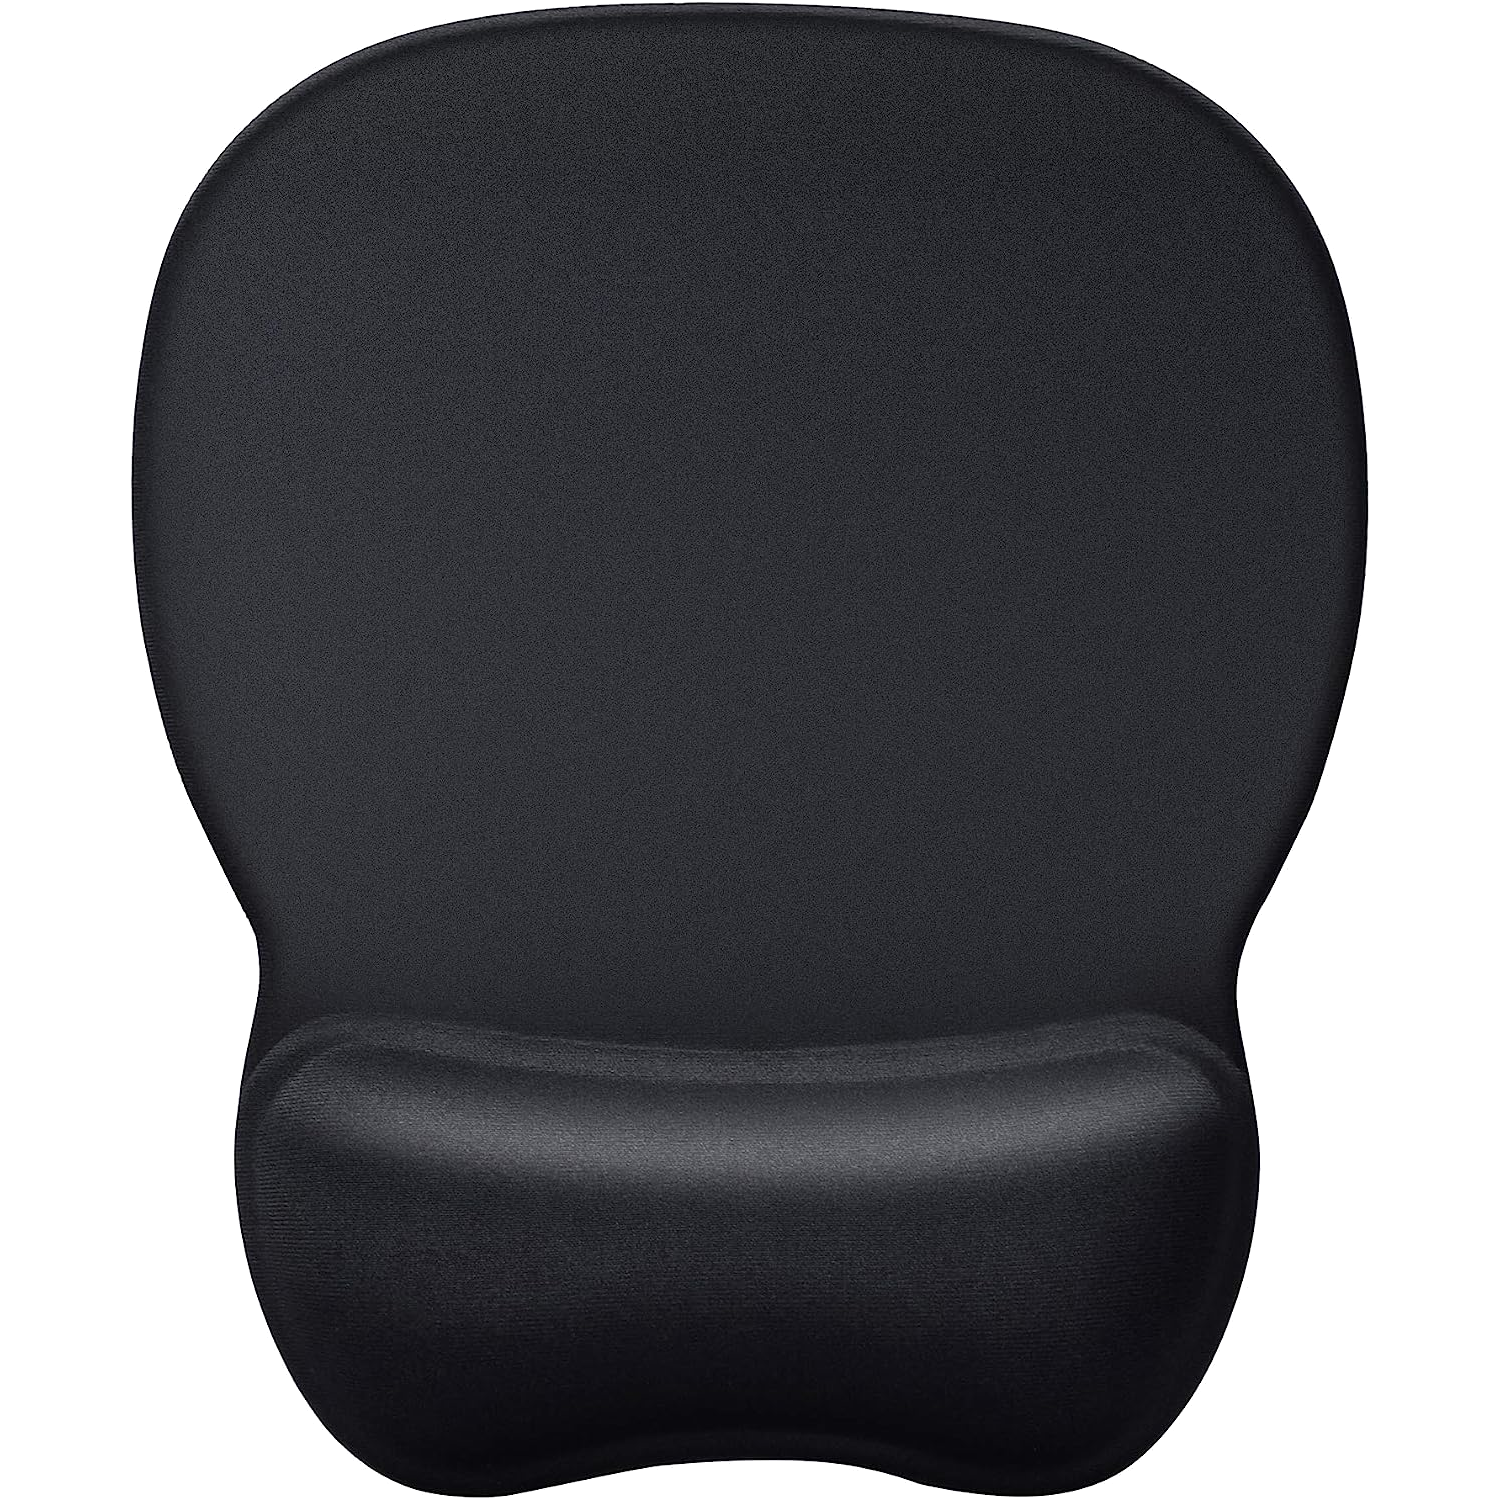 MROCO mouse pad with gel wristpad.